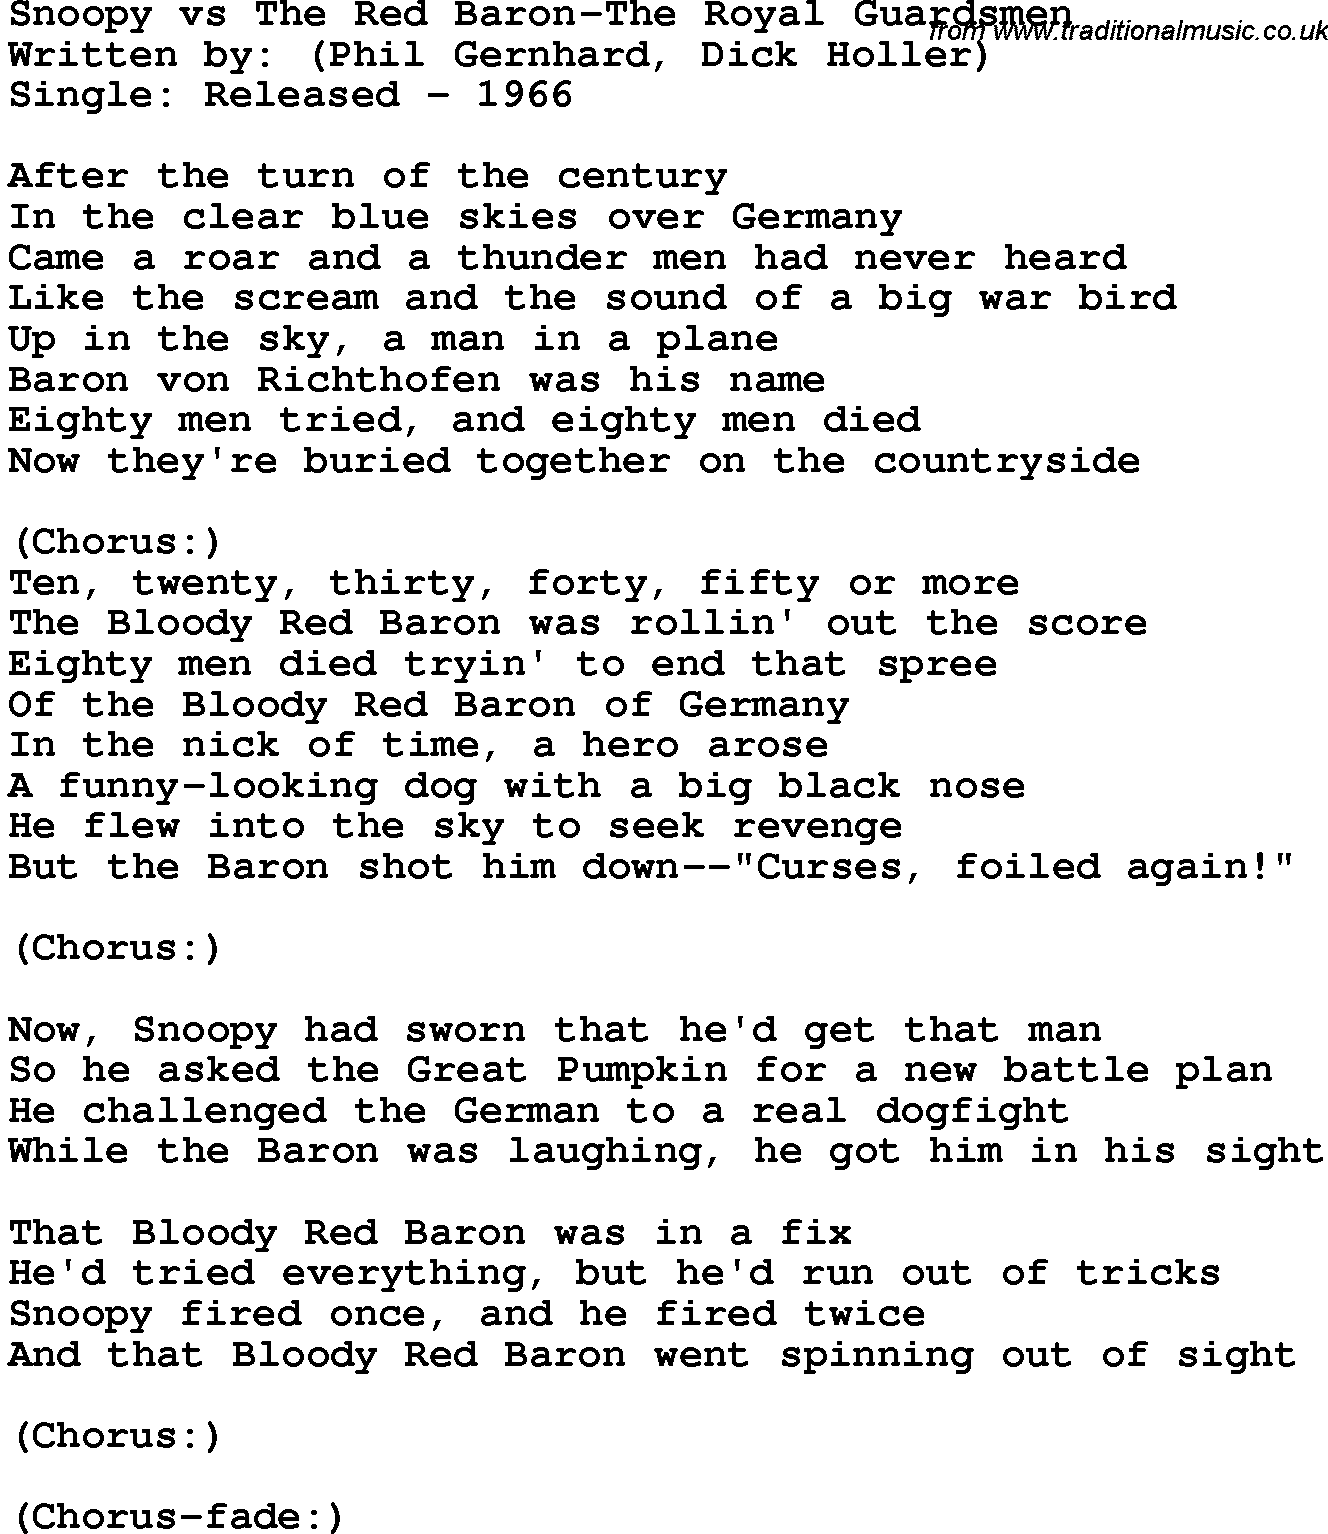 Novelty song: Snoopy Vs The Red Baron-The Royal Guardsmen lyrics